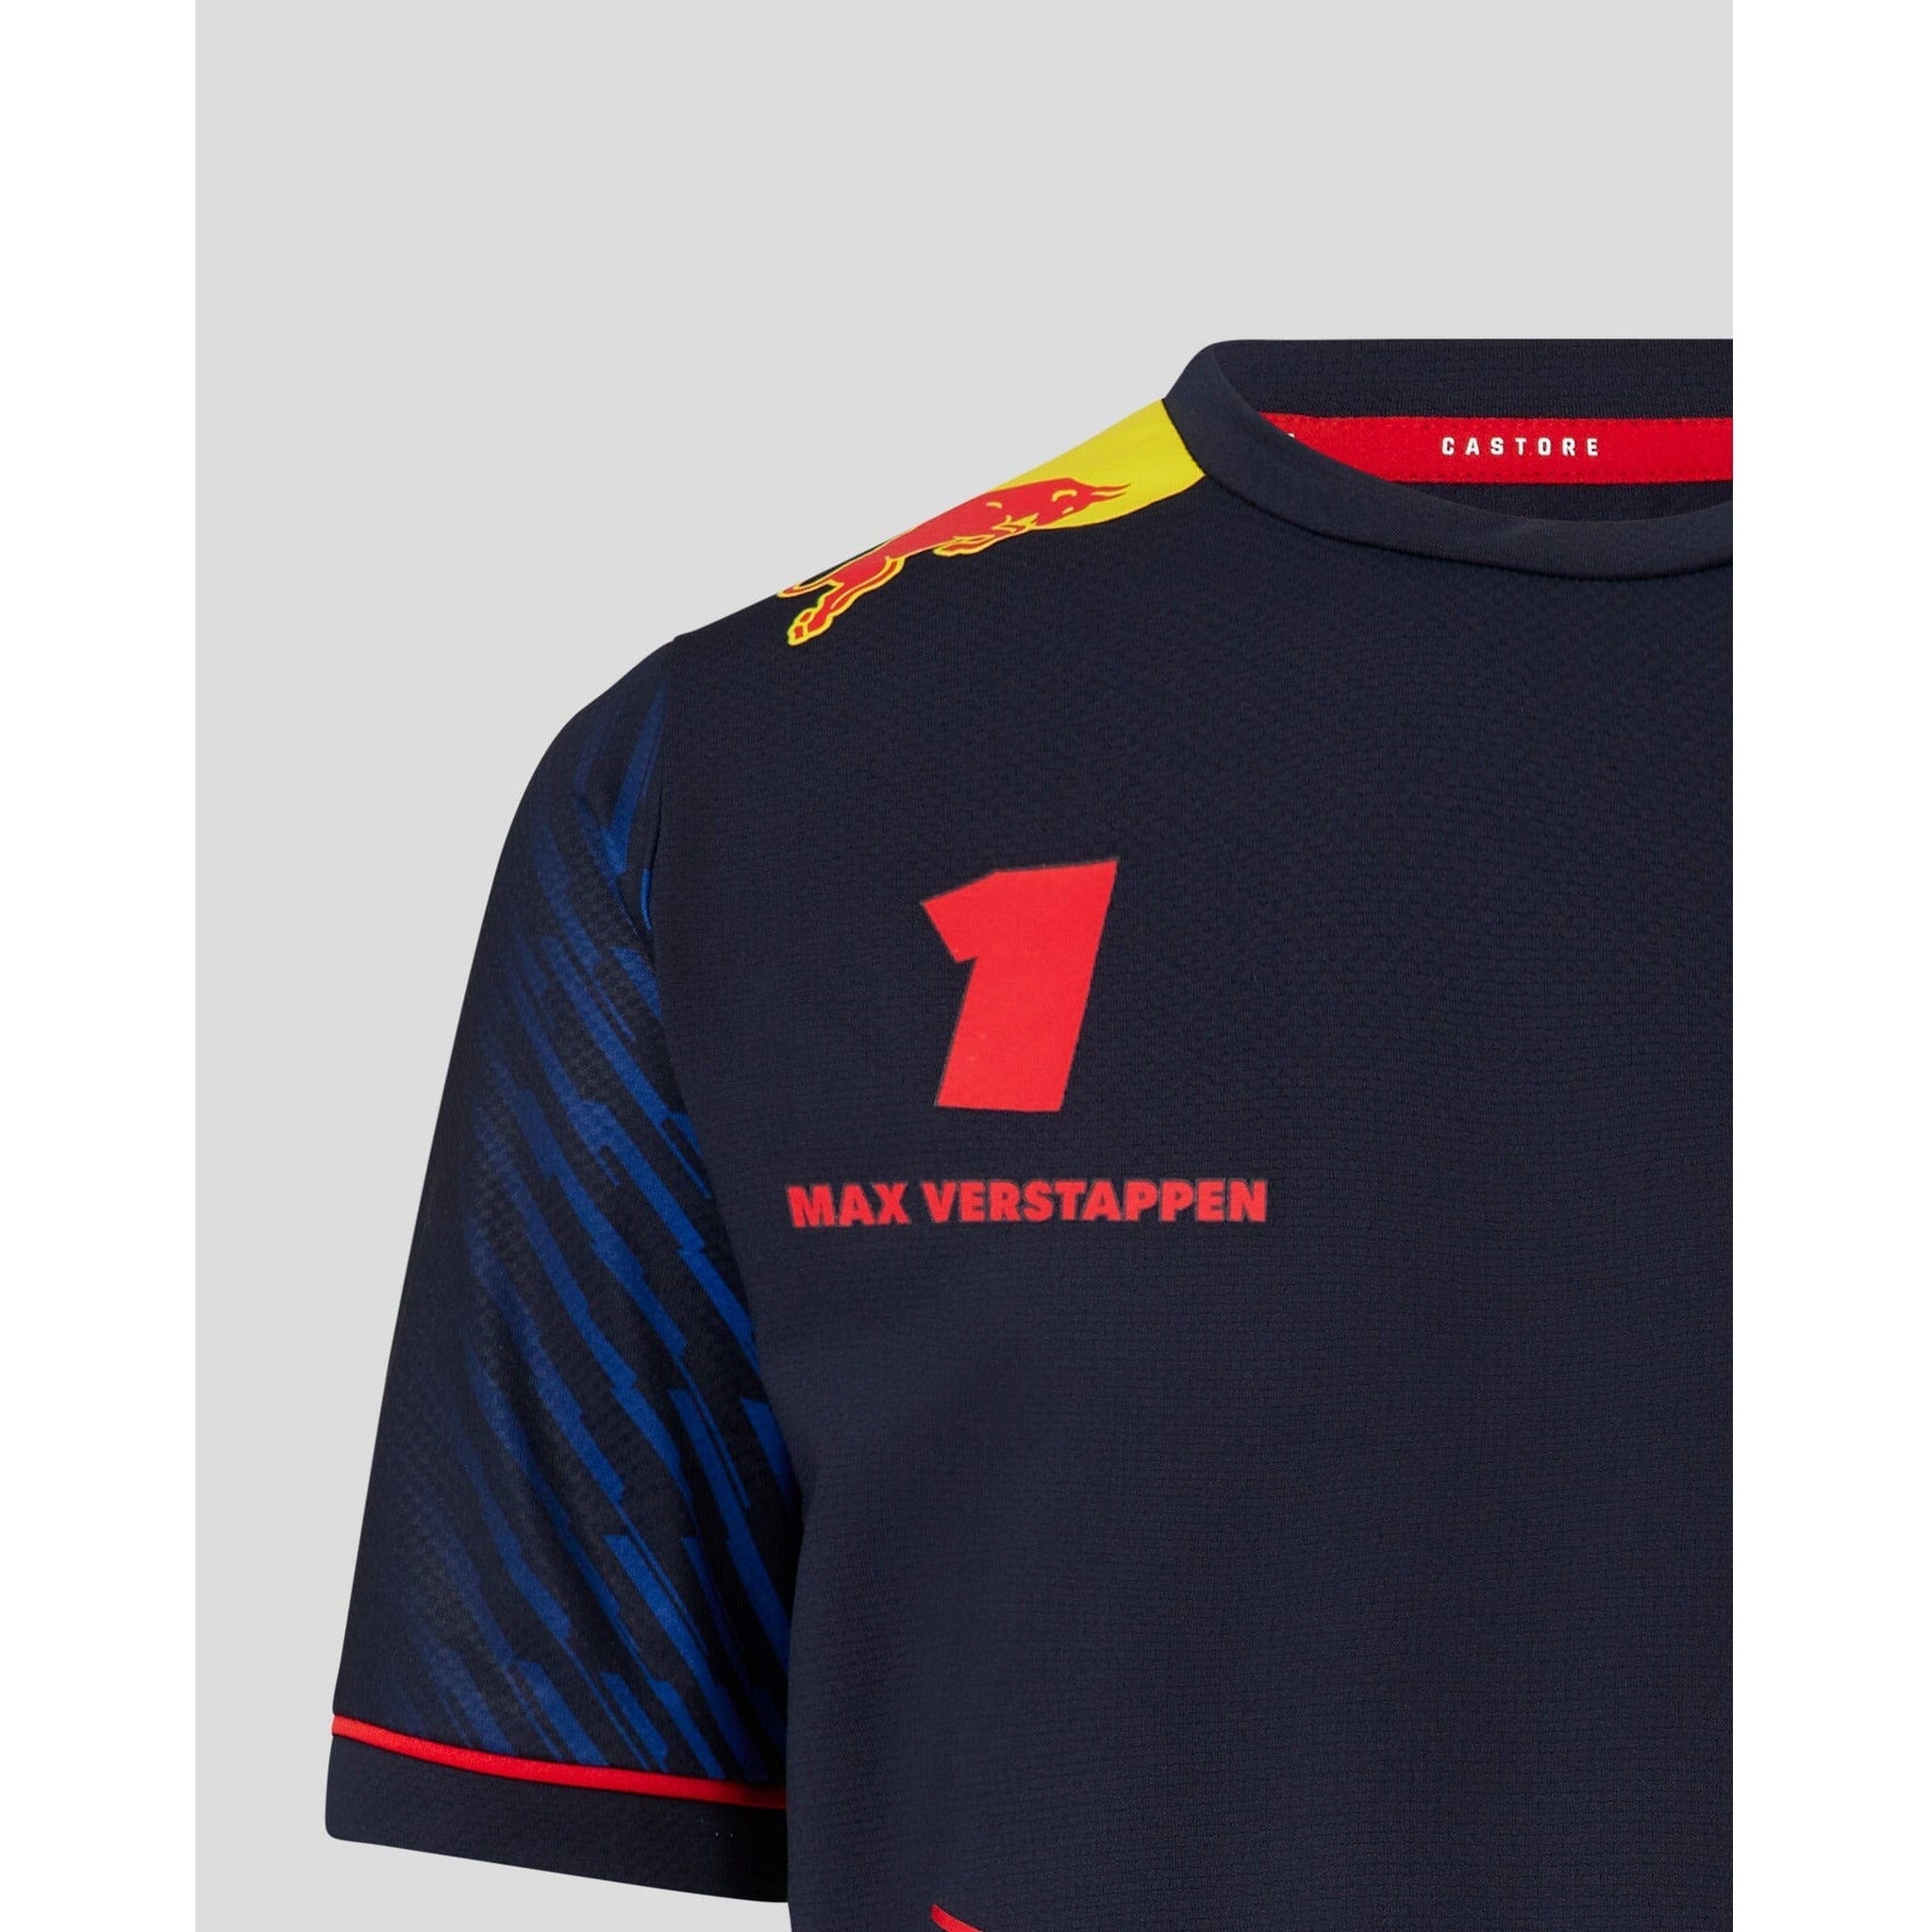 Red Bull Racing F1 Kid's 2023 Max Verstappen Team T-Shirt - Youth Navy